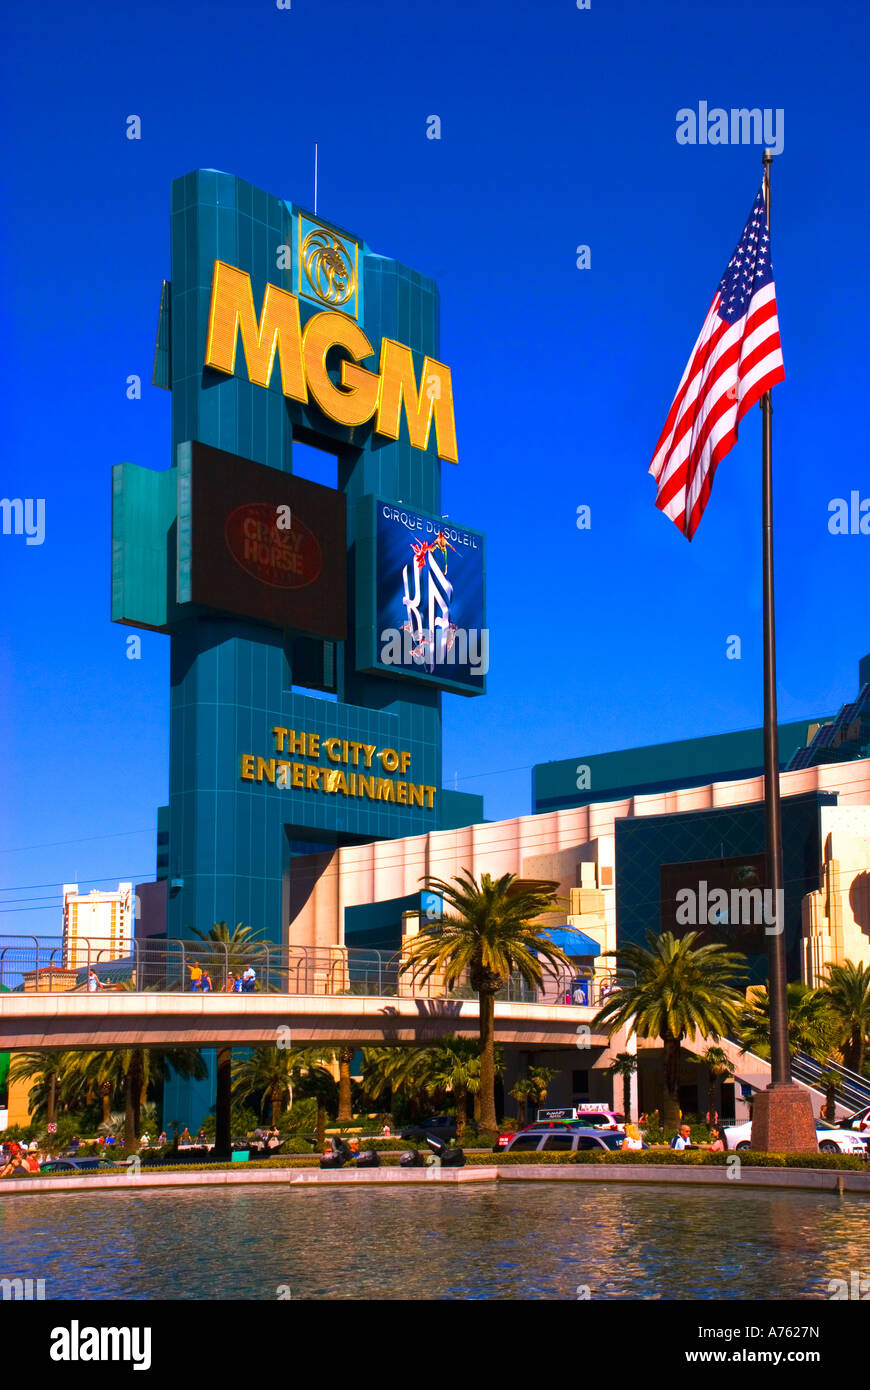 Las Vegas MGM Hotel sign Stock Photo